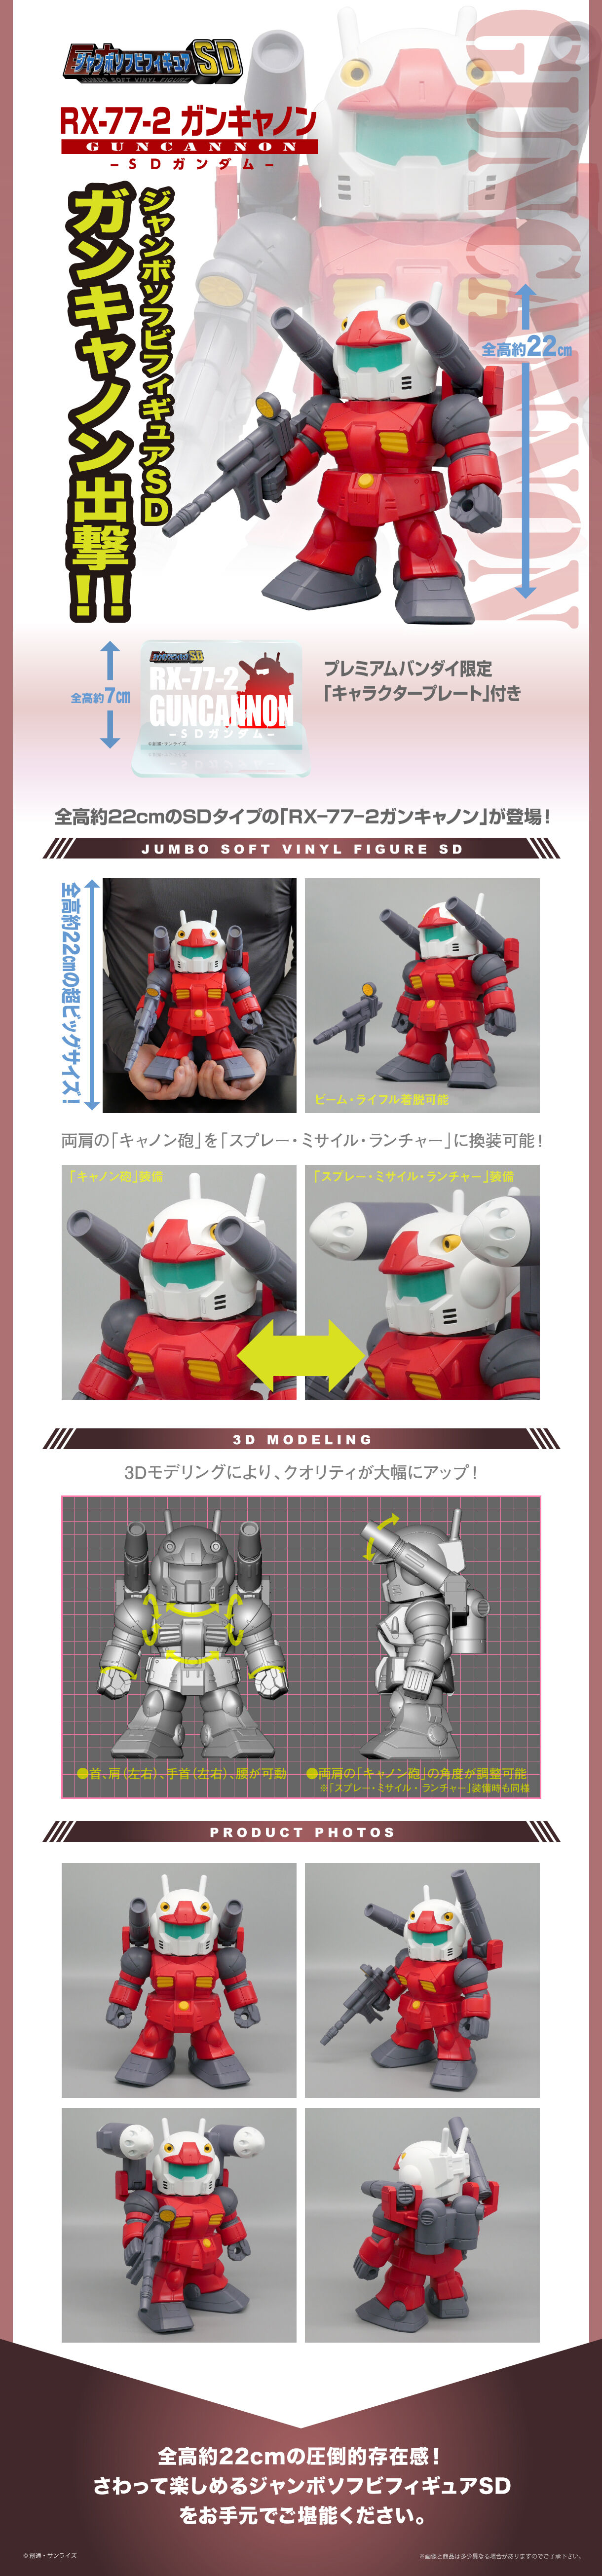 Jumbo Soft Vinyl Figure SD RX-77-2 Guncannon -SD Gundam-